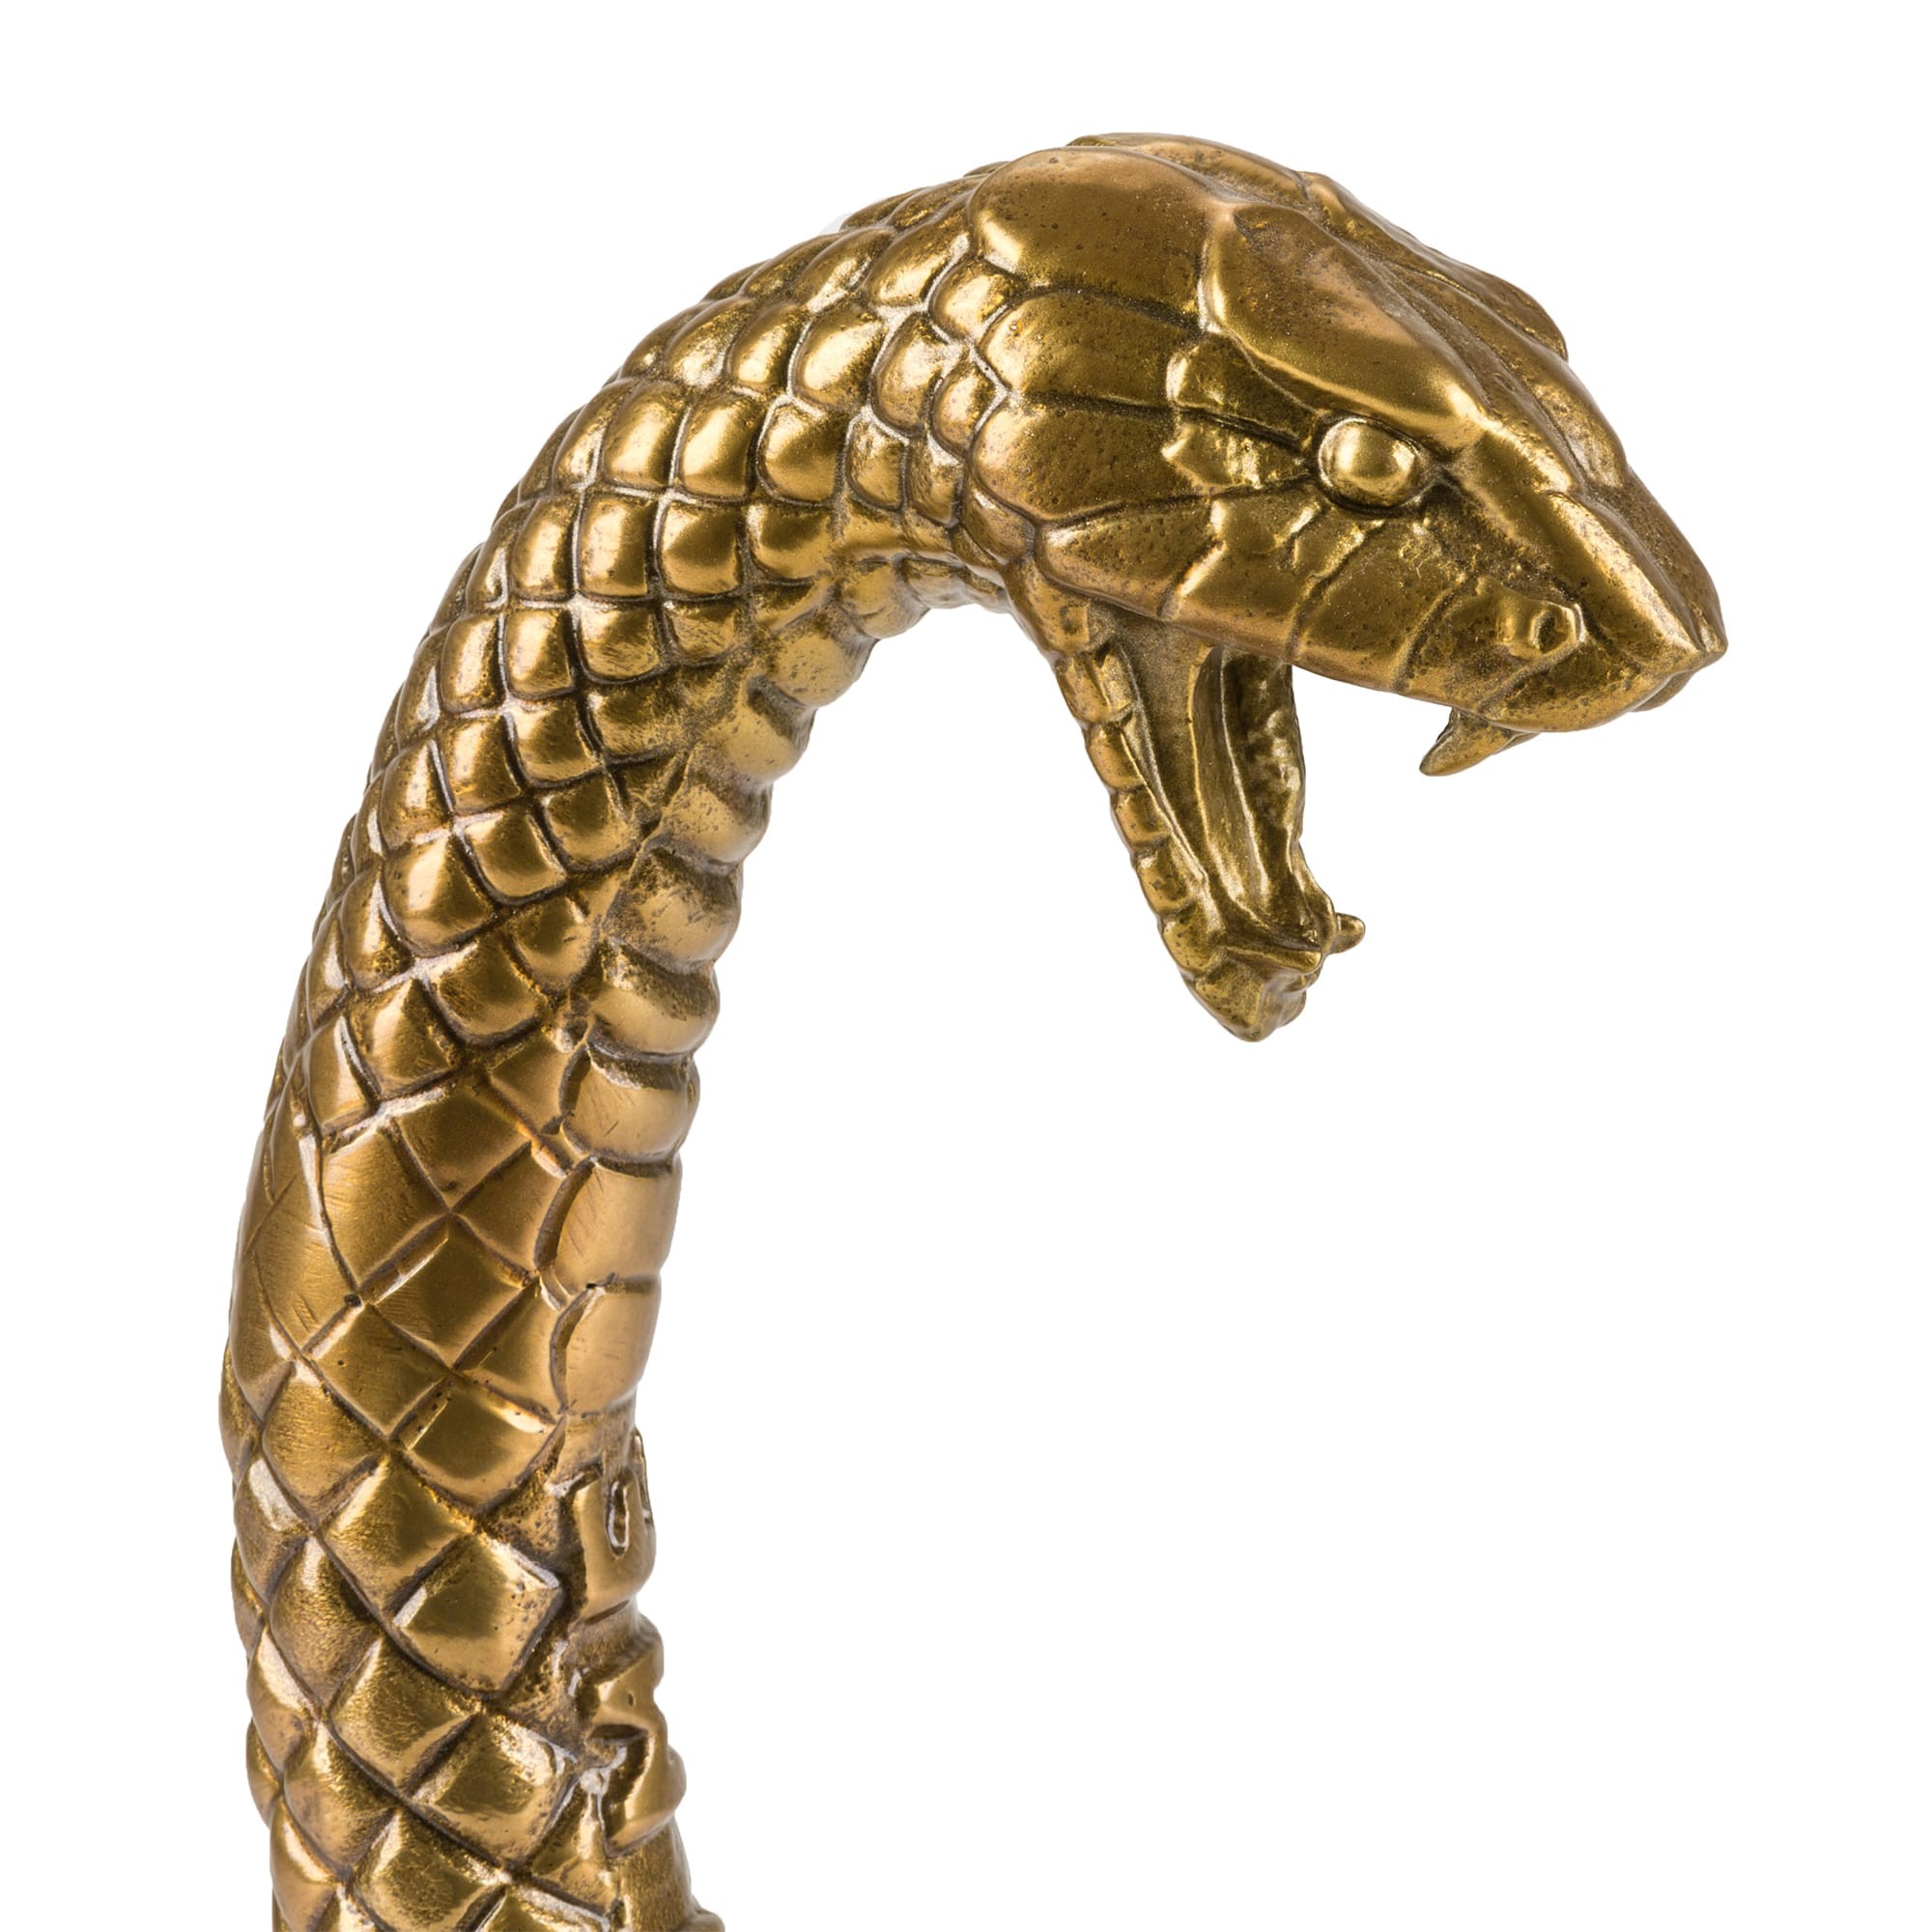 Snake Sculpture in Gold